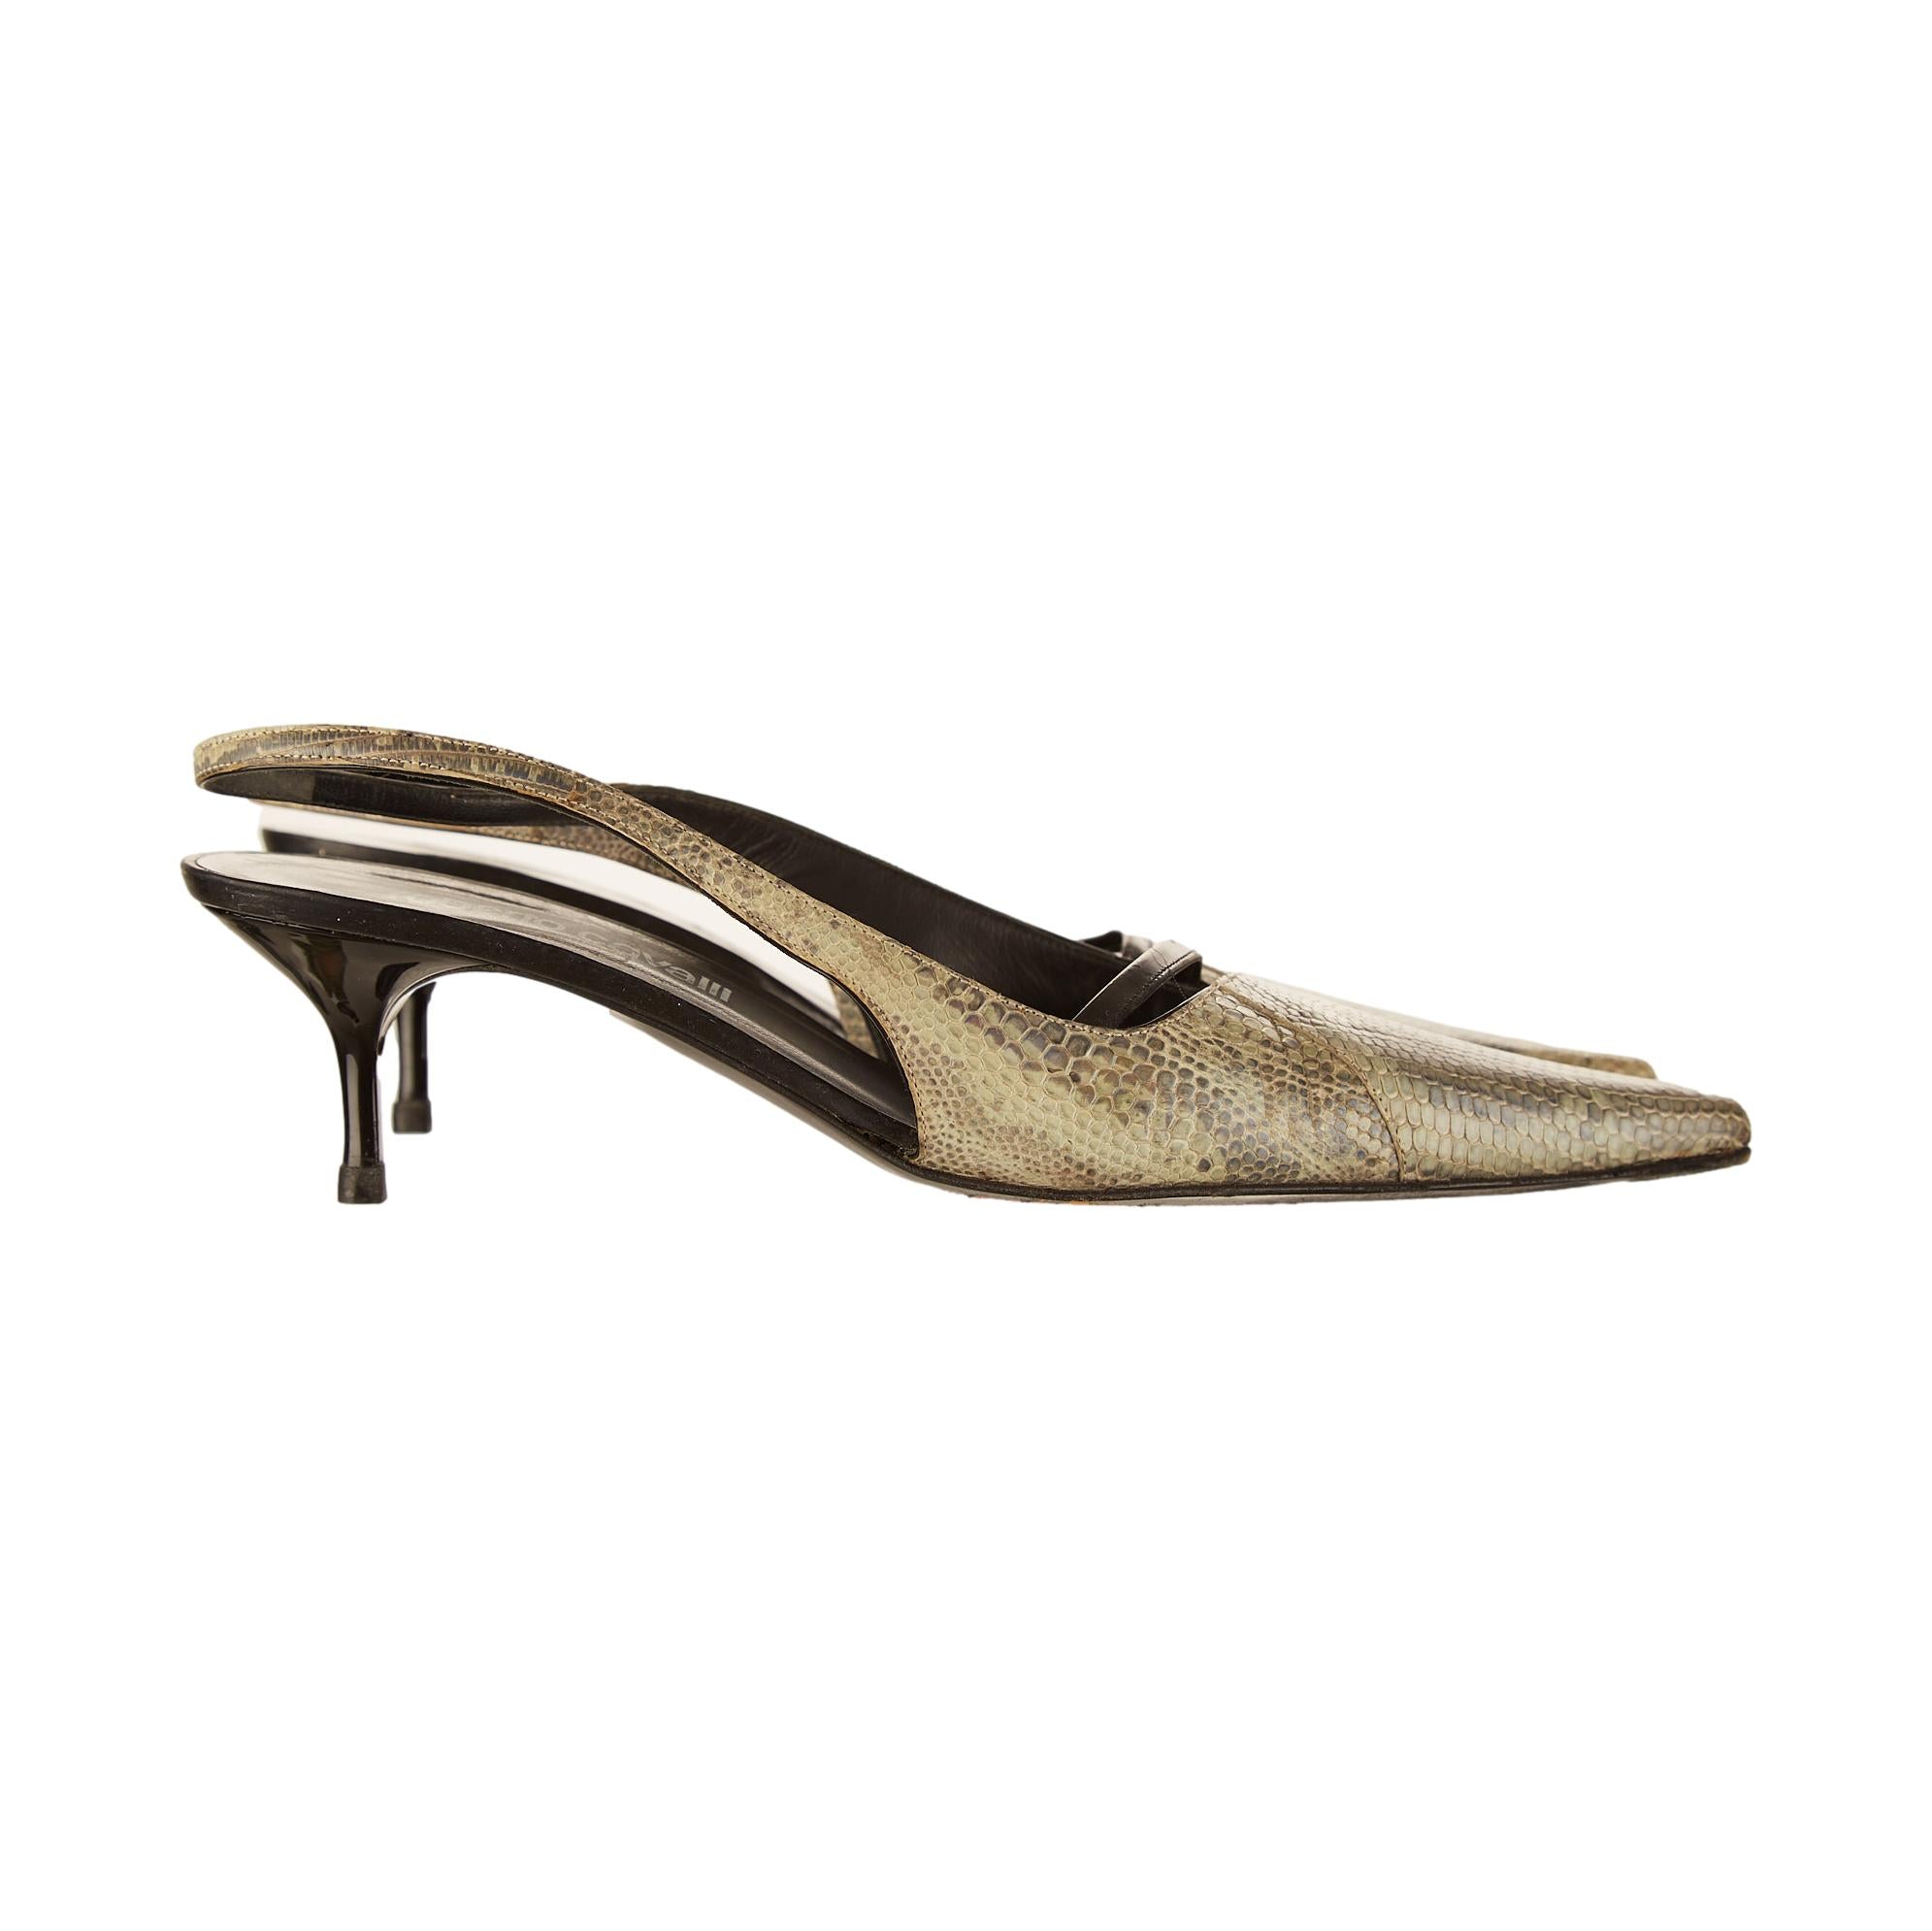 Snakeskin Heels Women's Pointed Toe Snakeskin Shoes Zip Boots:  Amazon.co.uk: Fashion